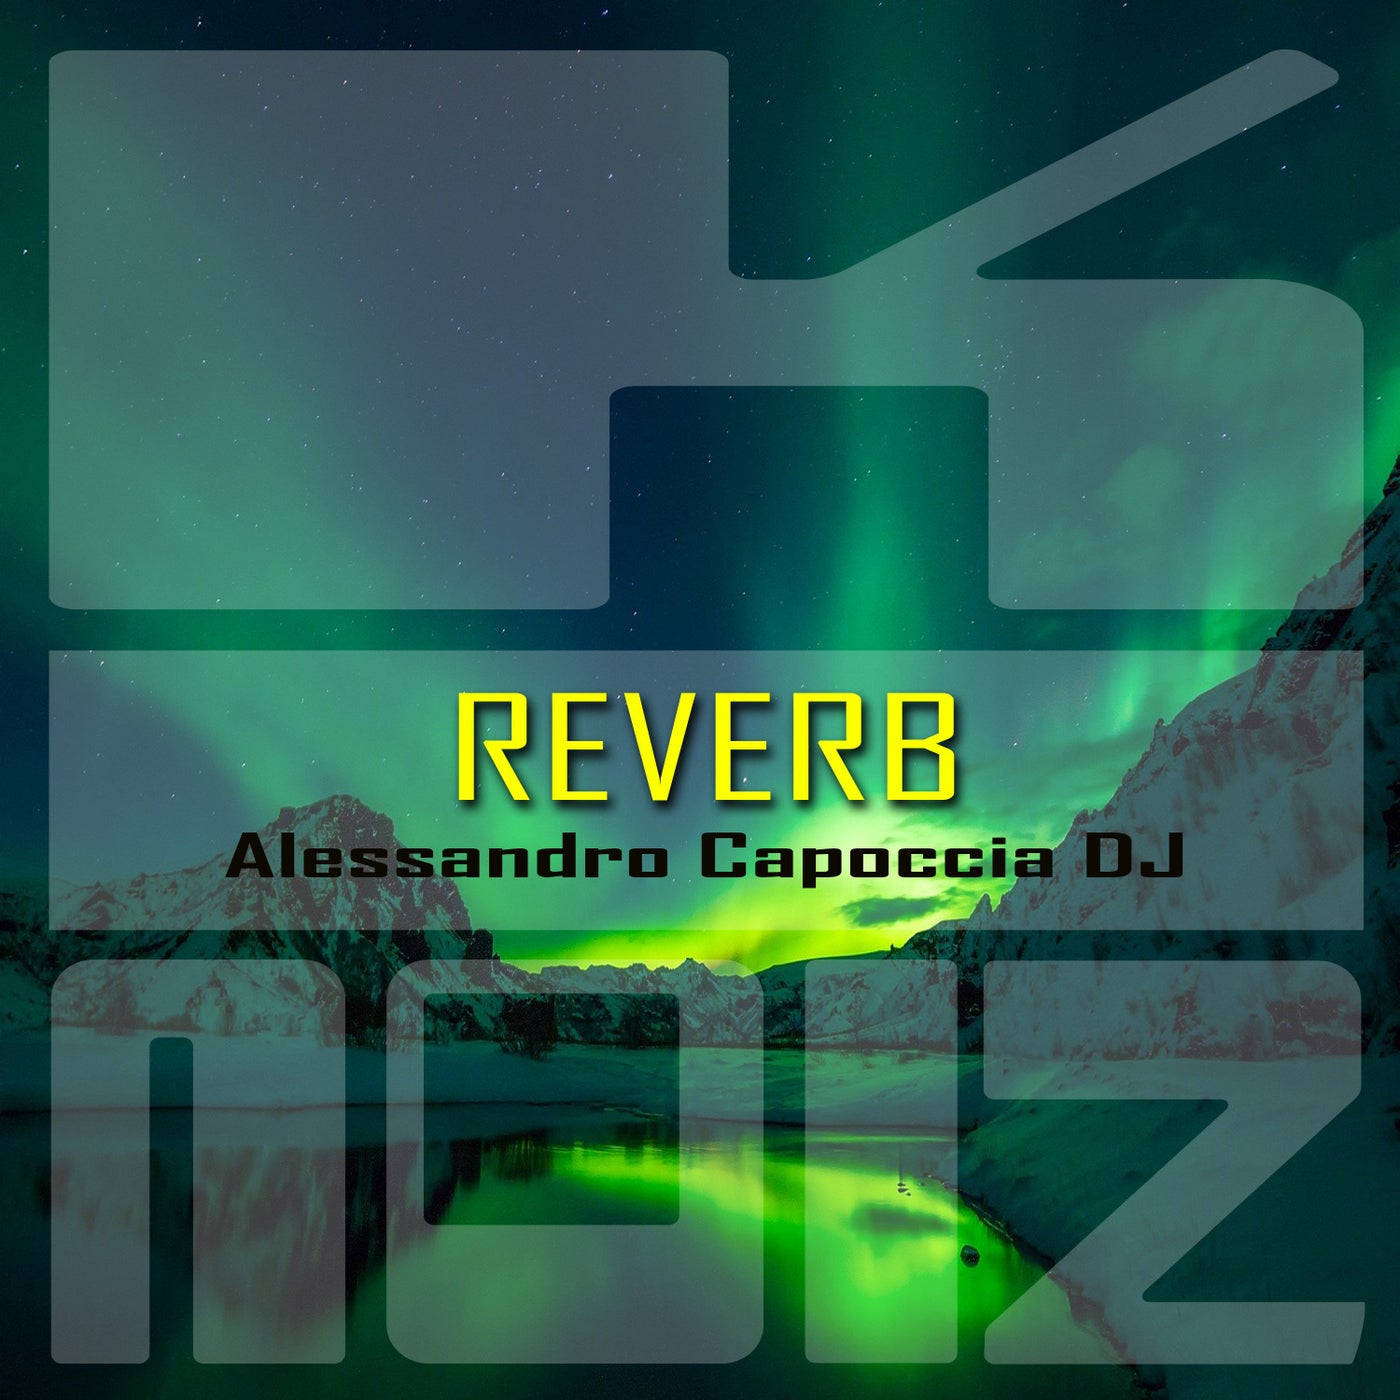 Alessandro Capoccia DJ - Reverb [K-Noiz]